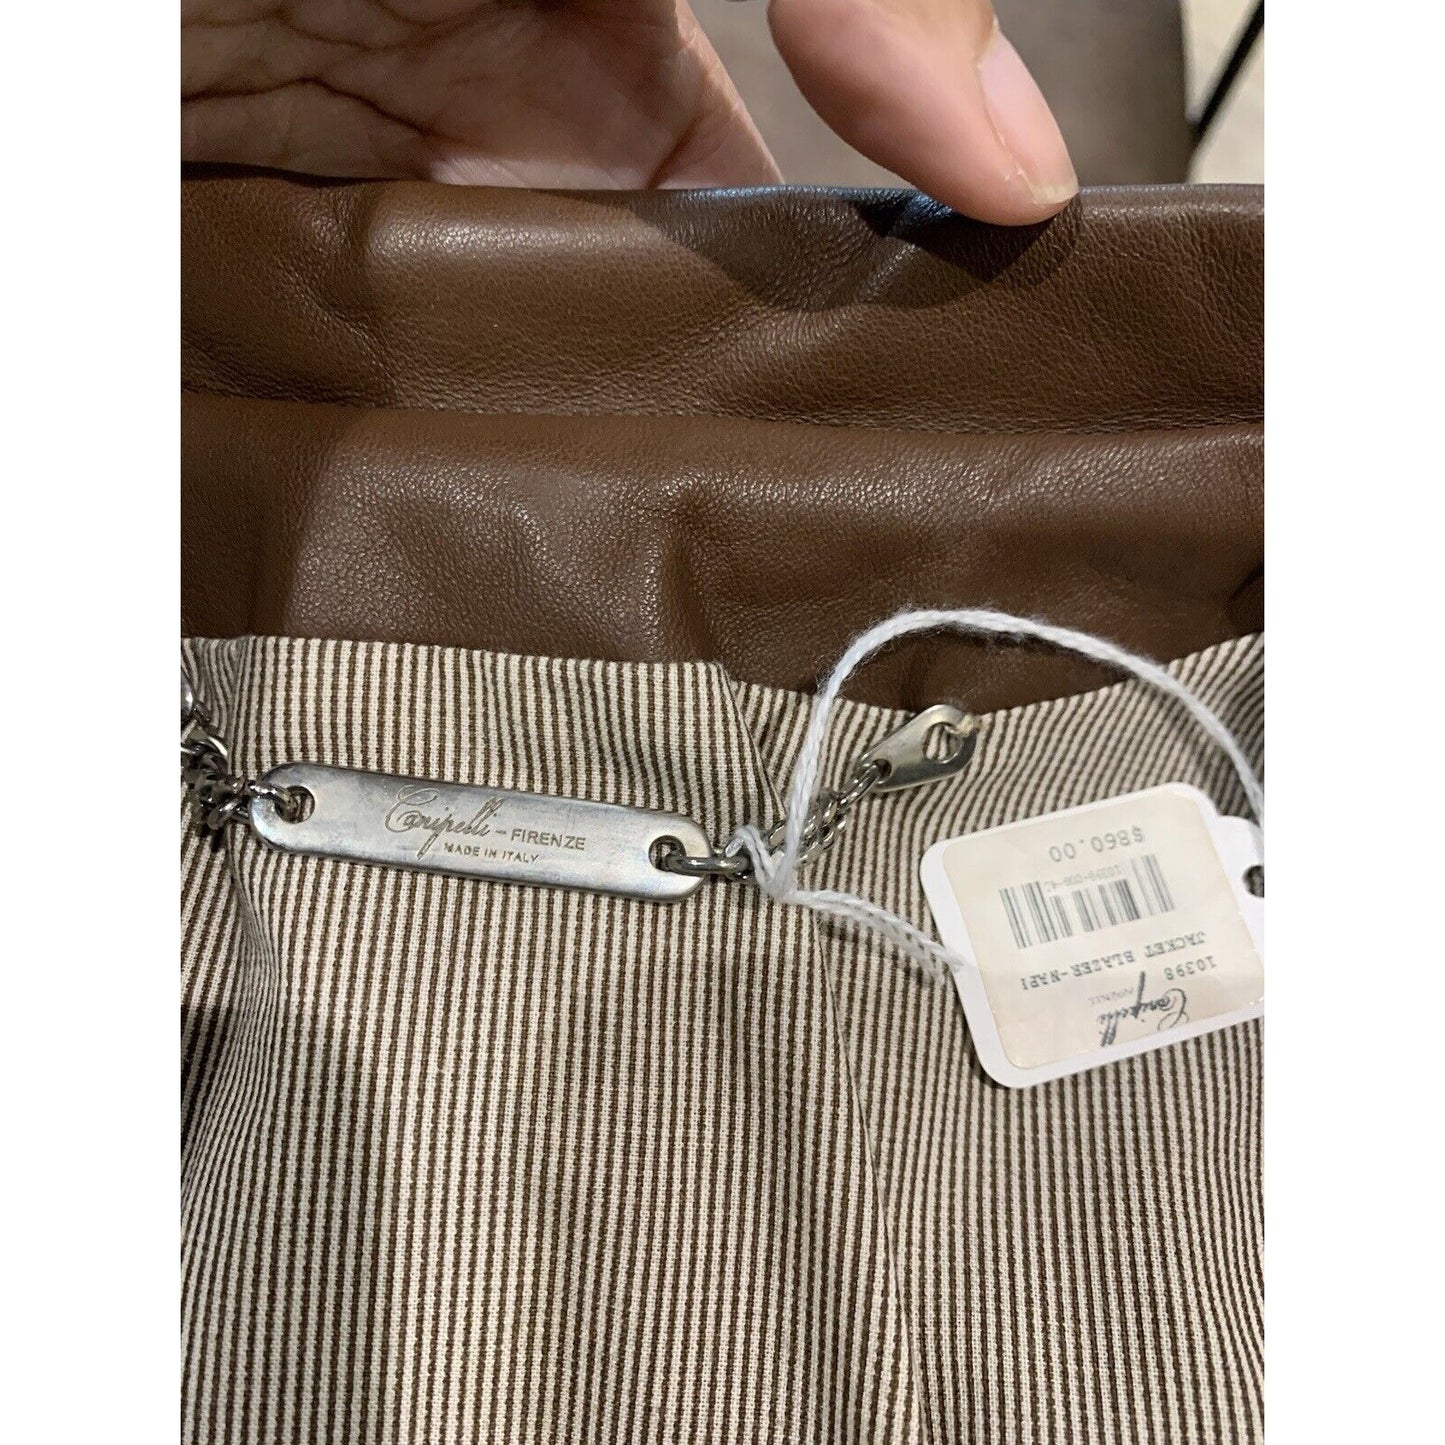 Canipelle Women’s Nappa Leather Blazer Jacket